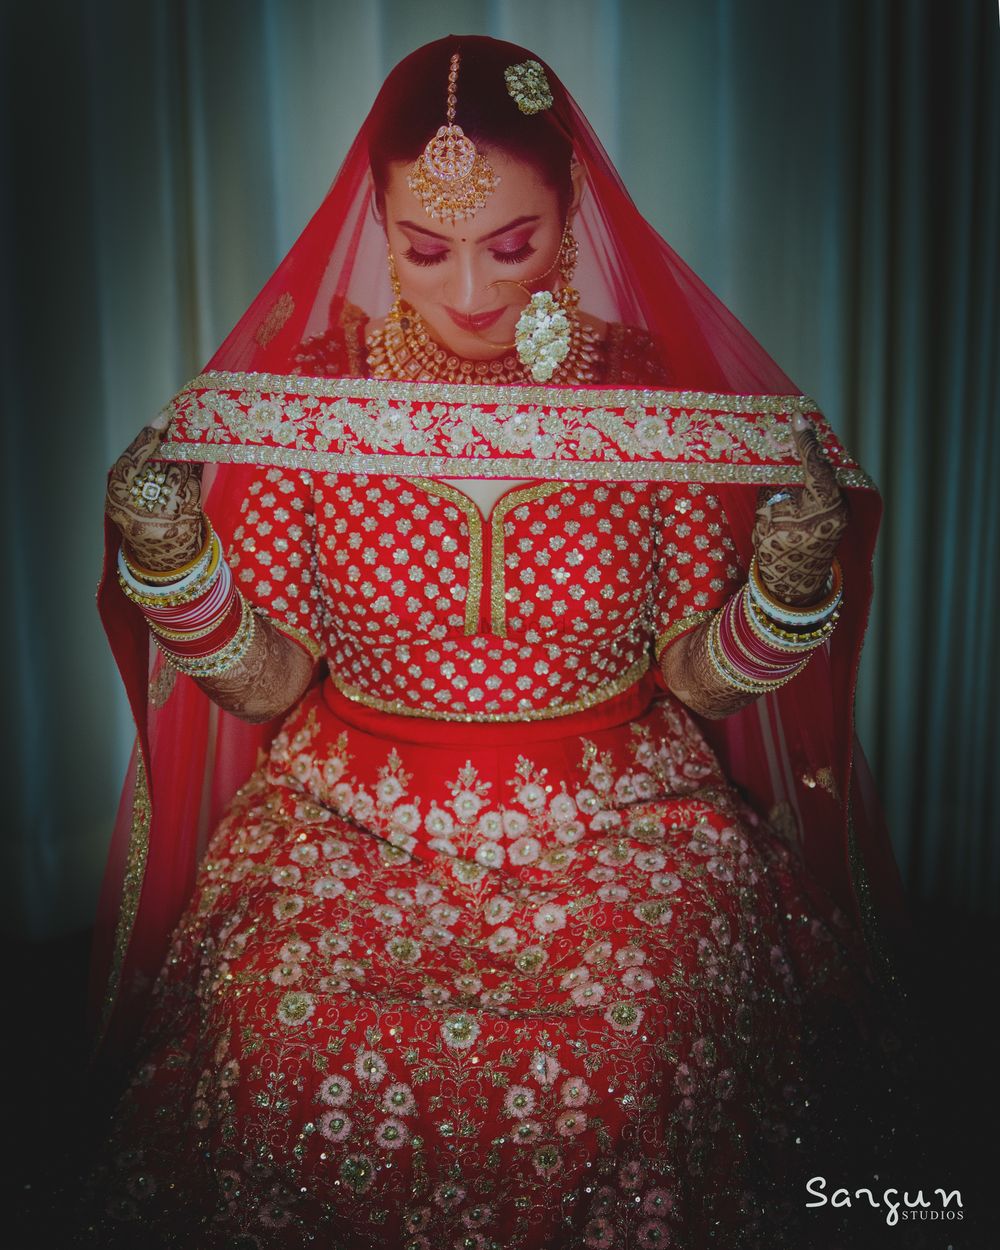 Photo From smriti's wedding - By Sargun Studios